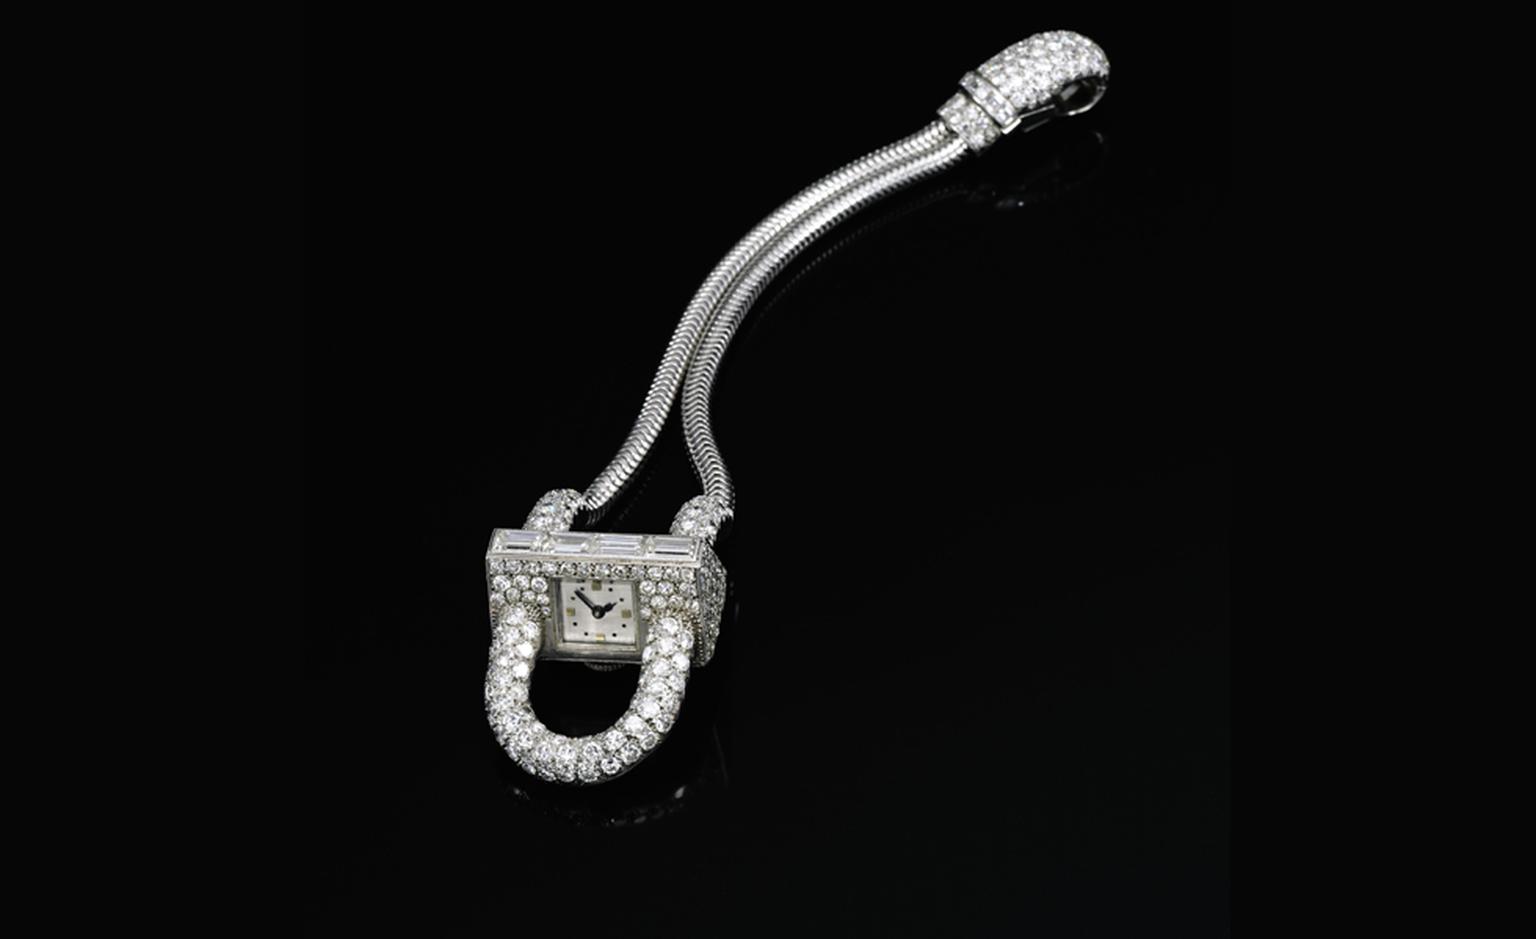 LLot 411. Important 'Cadenas' diamond bracelet & watch, Van Cleef & Arpels, Circa 1936. Estimate CHF 46,000 - CHF 63,000. SOLD FOR CHF 362,500